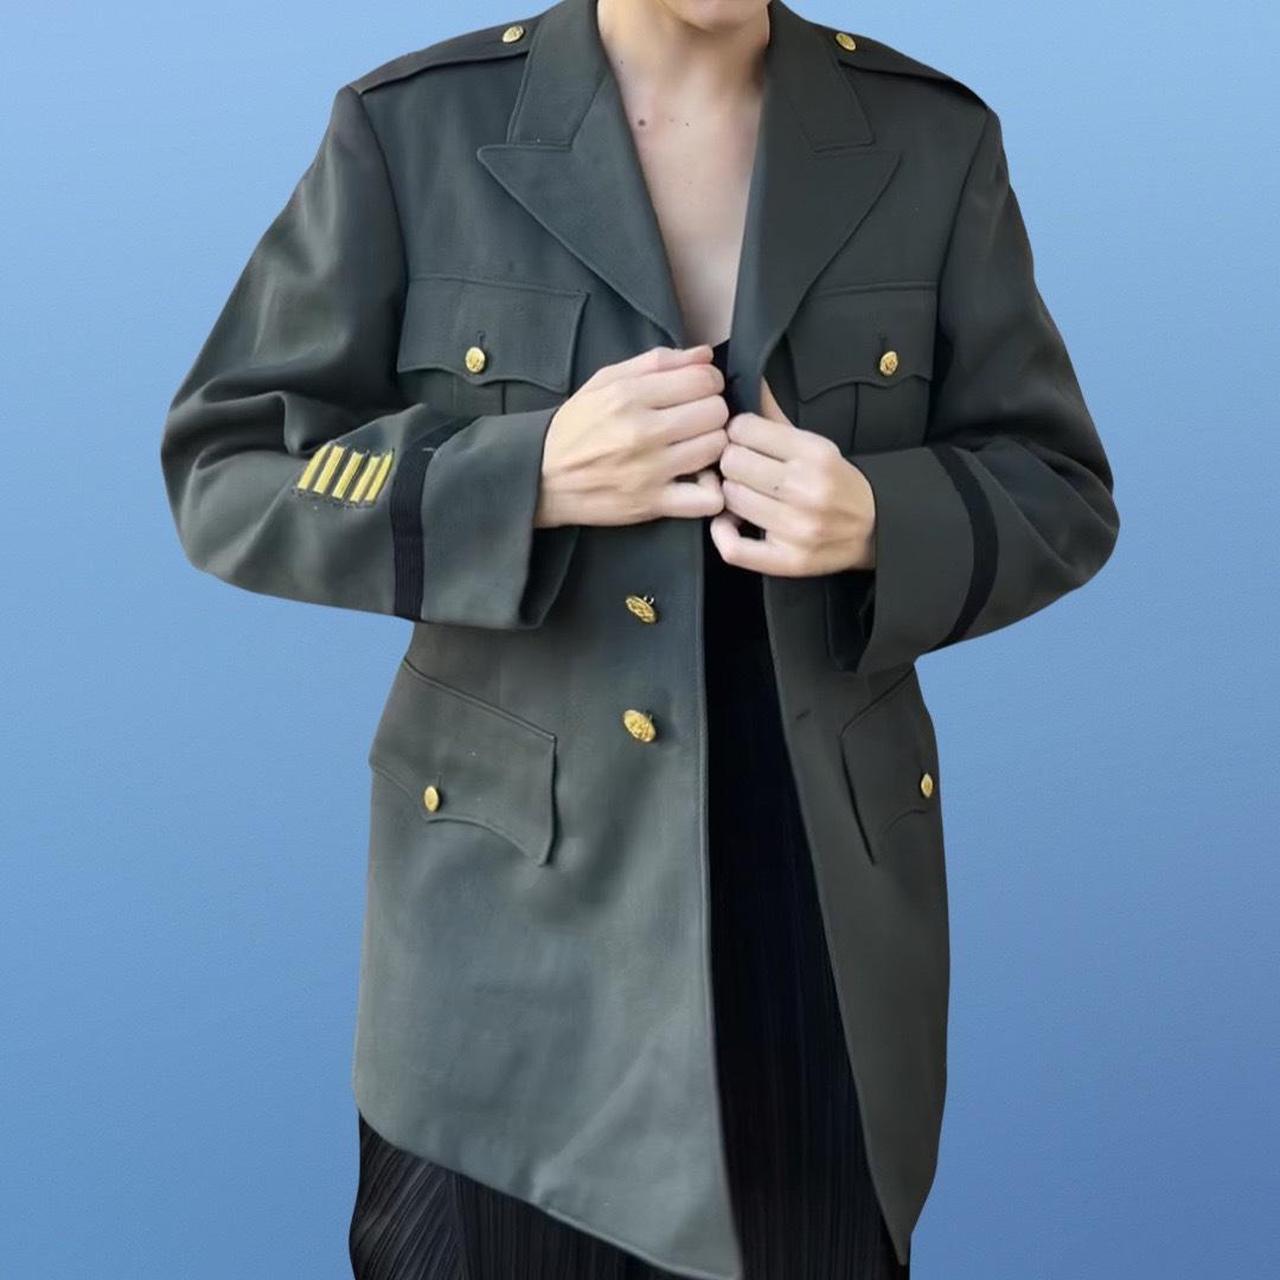 Vintage Coronet army uniform jacket originated in... - Depop